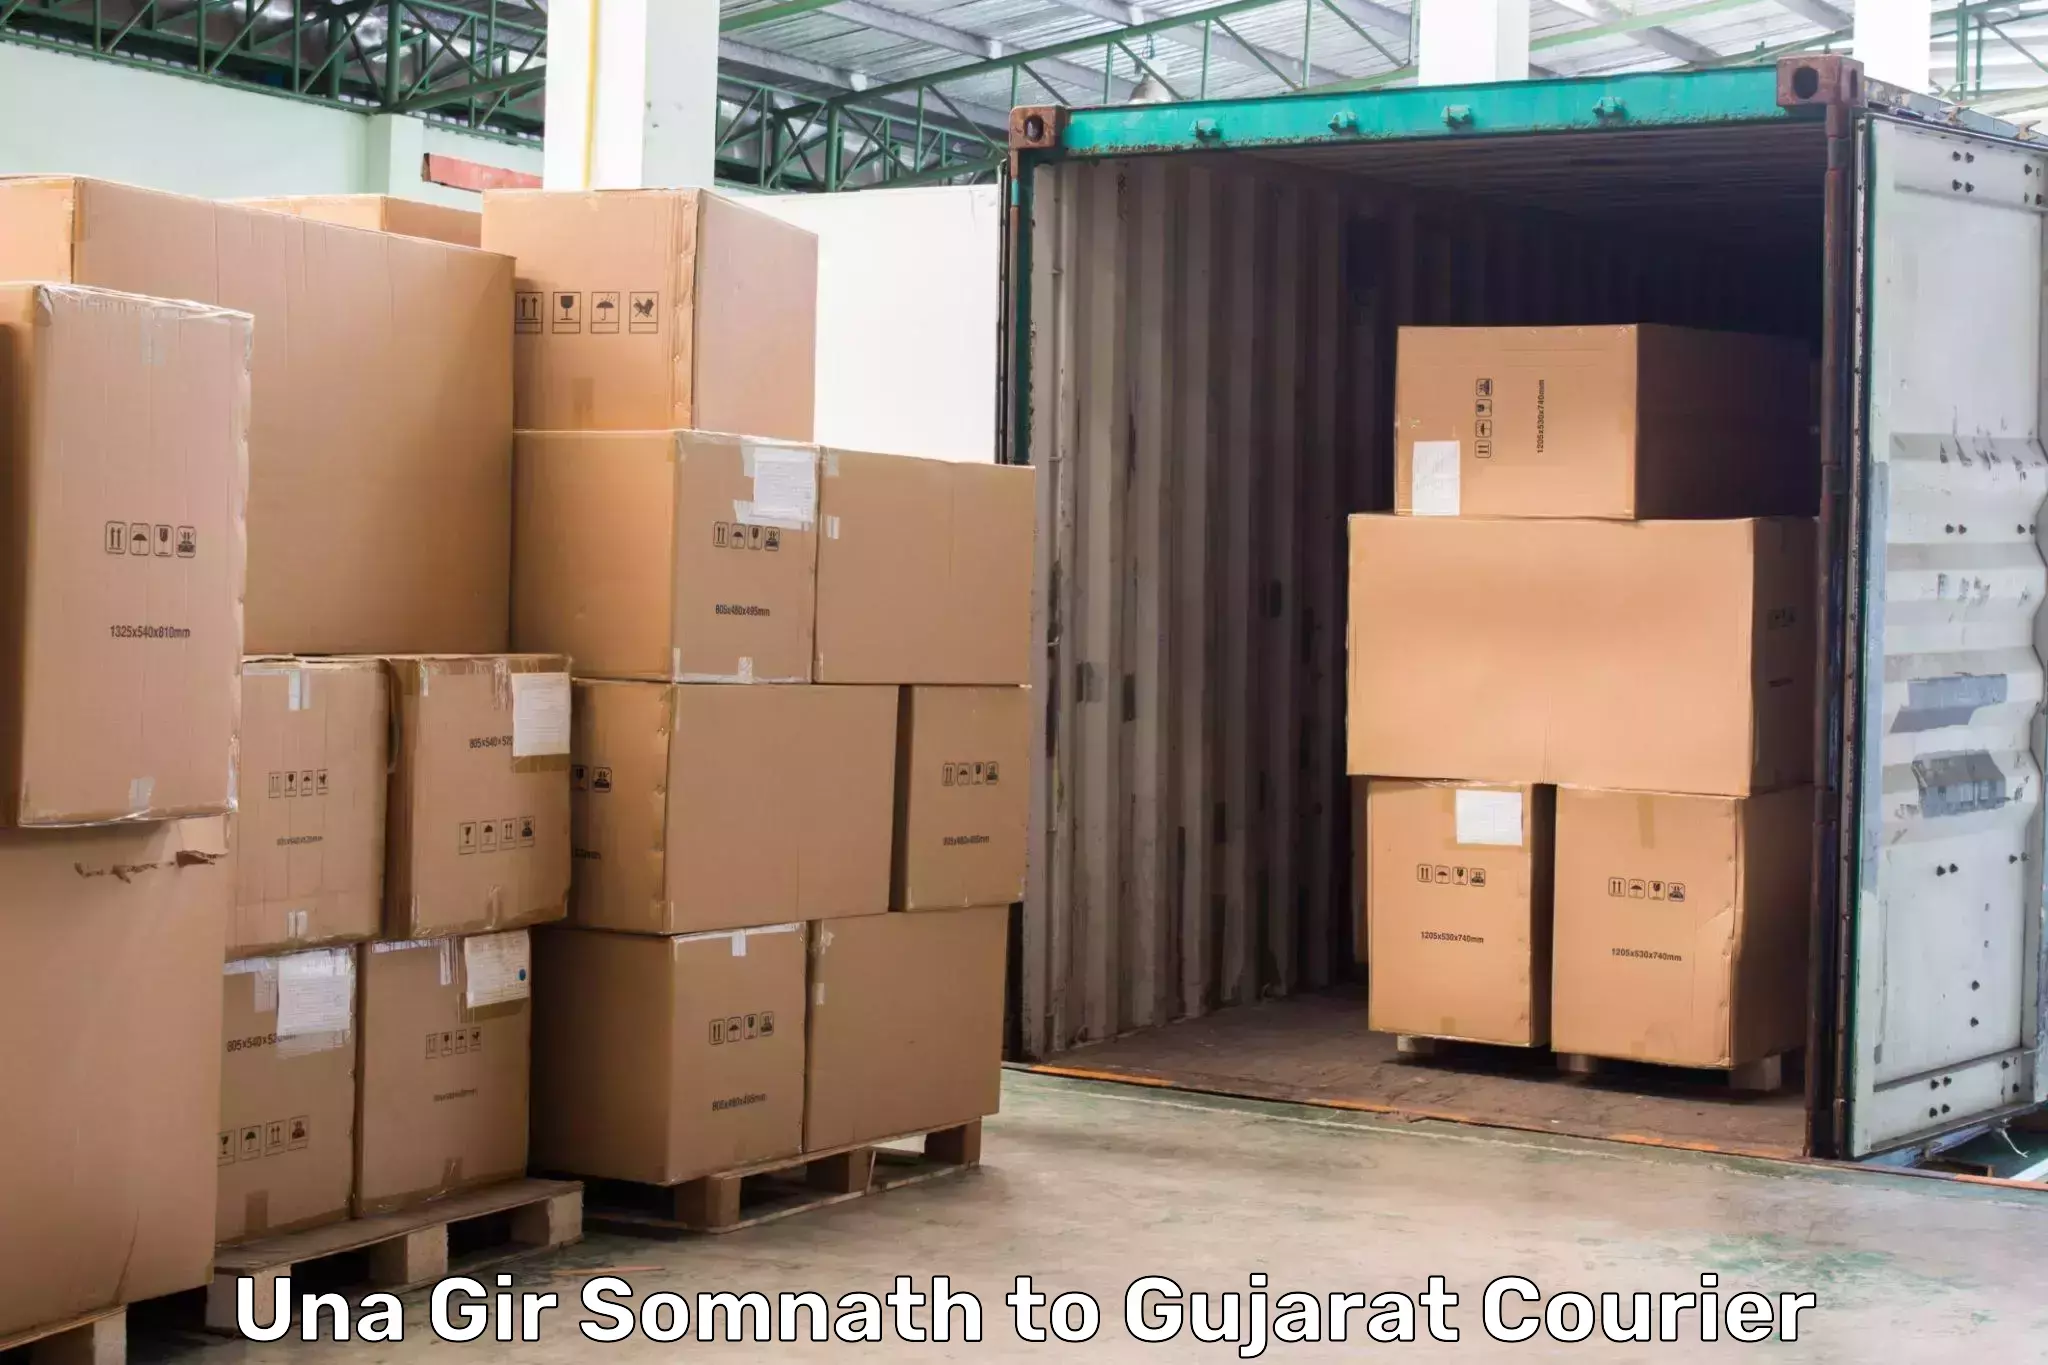 24/7 courier service Una Gir Somnath to Dabhoi